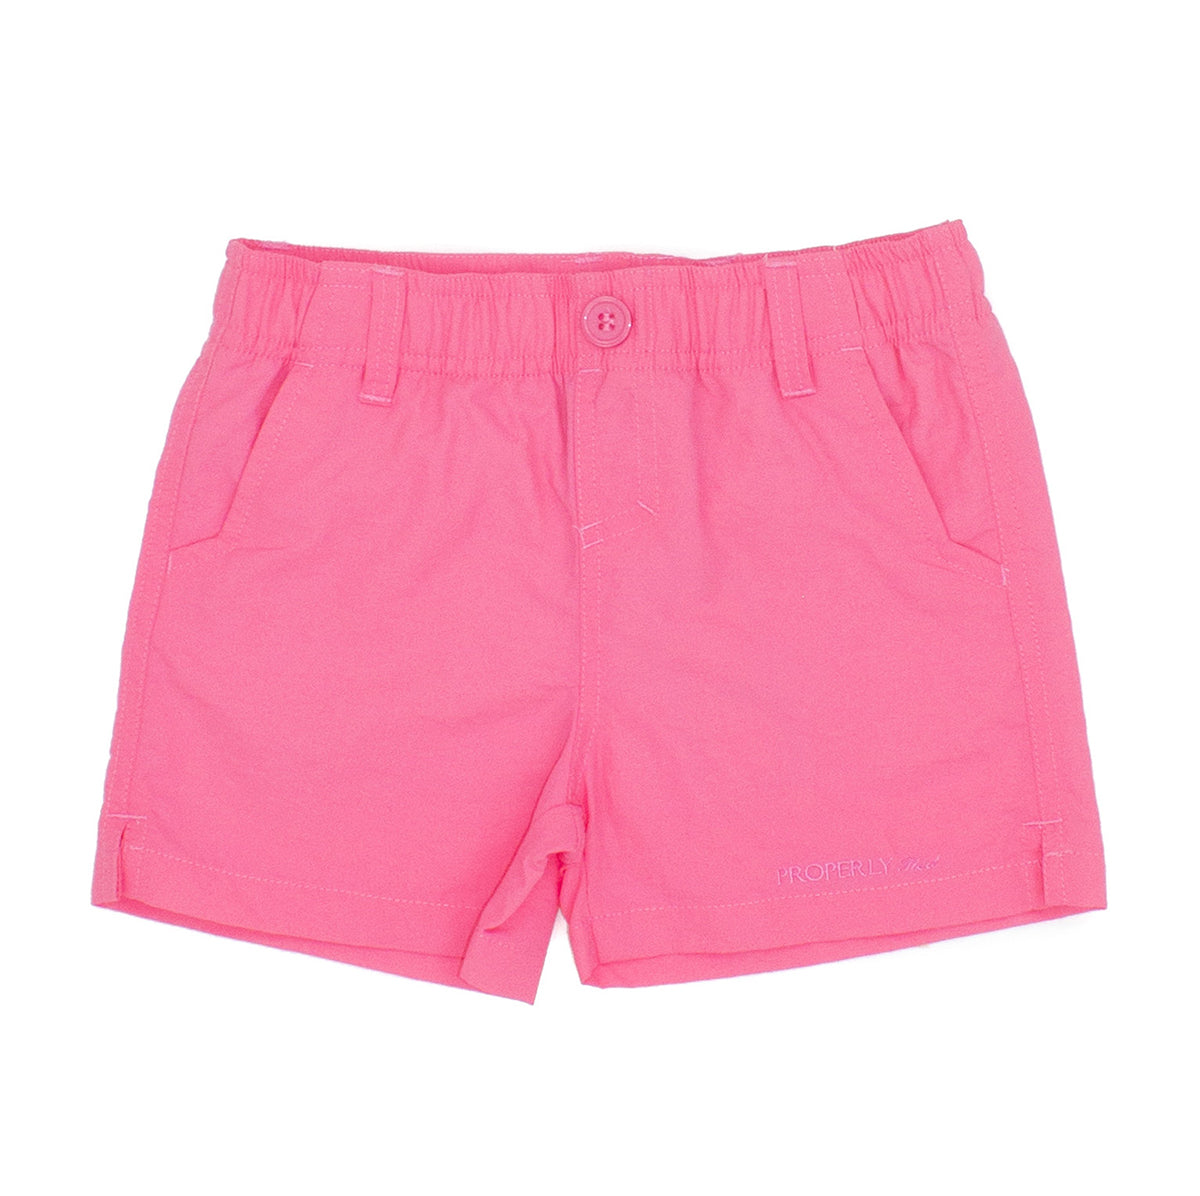 Properly Tied Toddler Girl's Azalea Pink Suzy Shorts